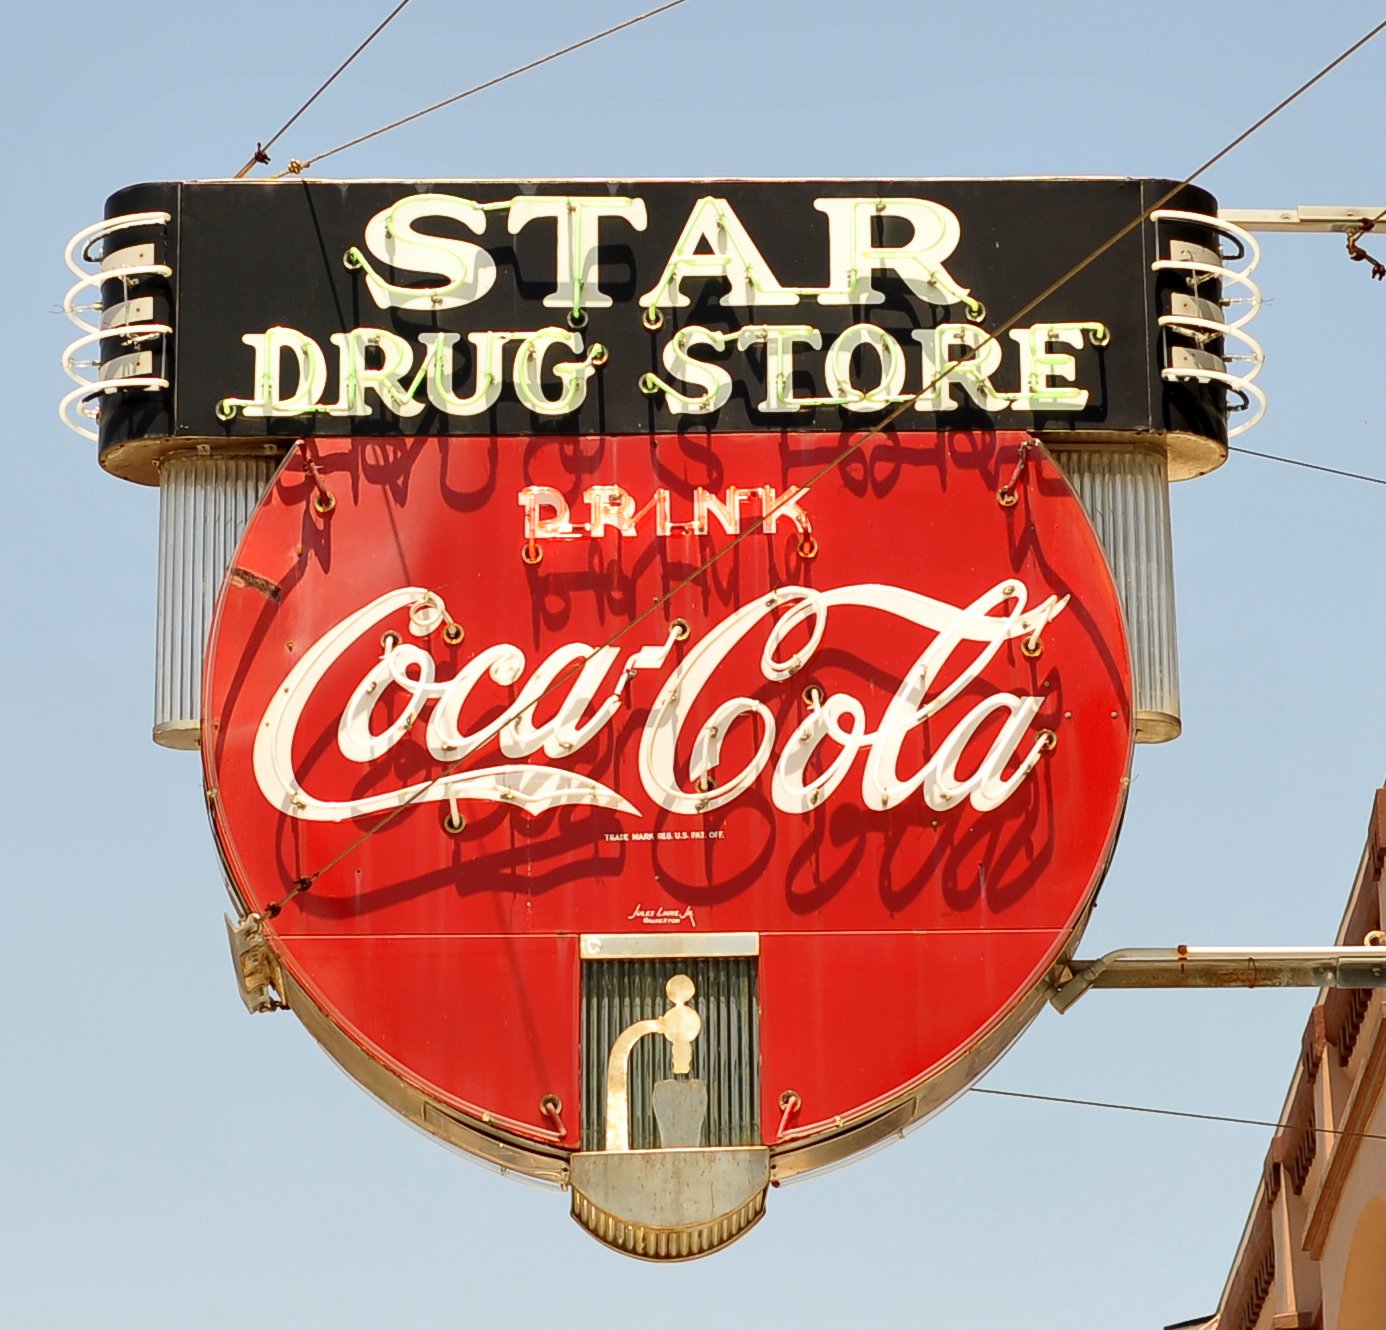 Star Drug Store - 510 23rd Street, Galveston, Texas U.S.A. - August 17, 2013